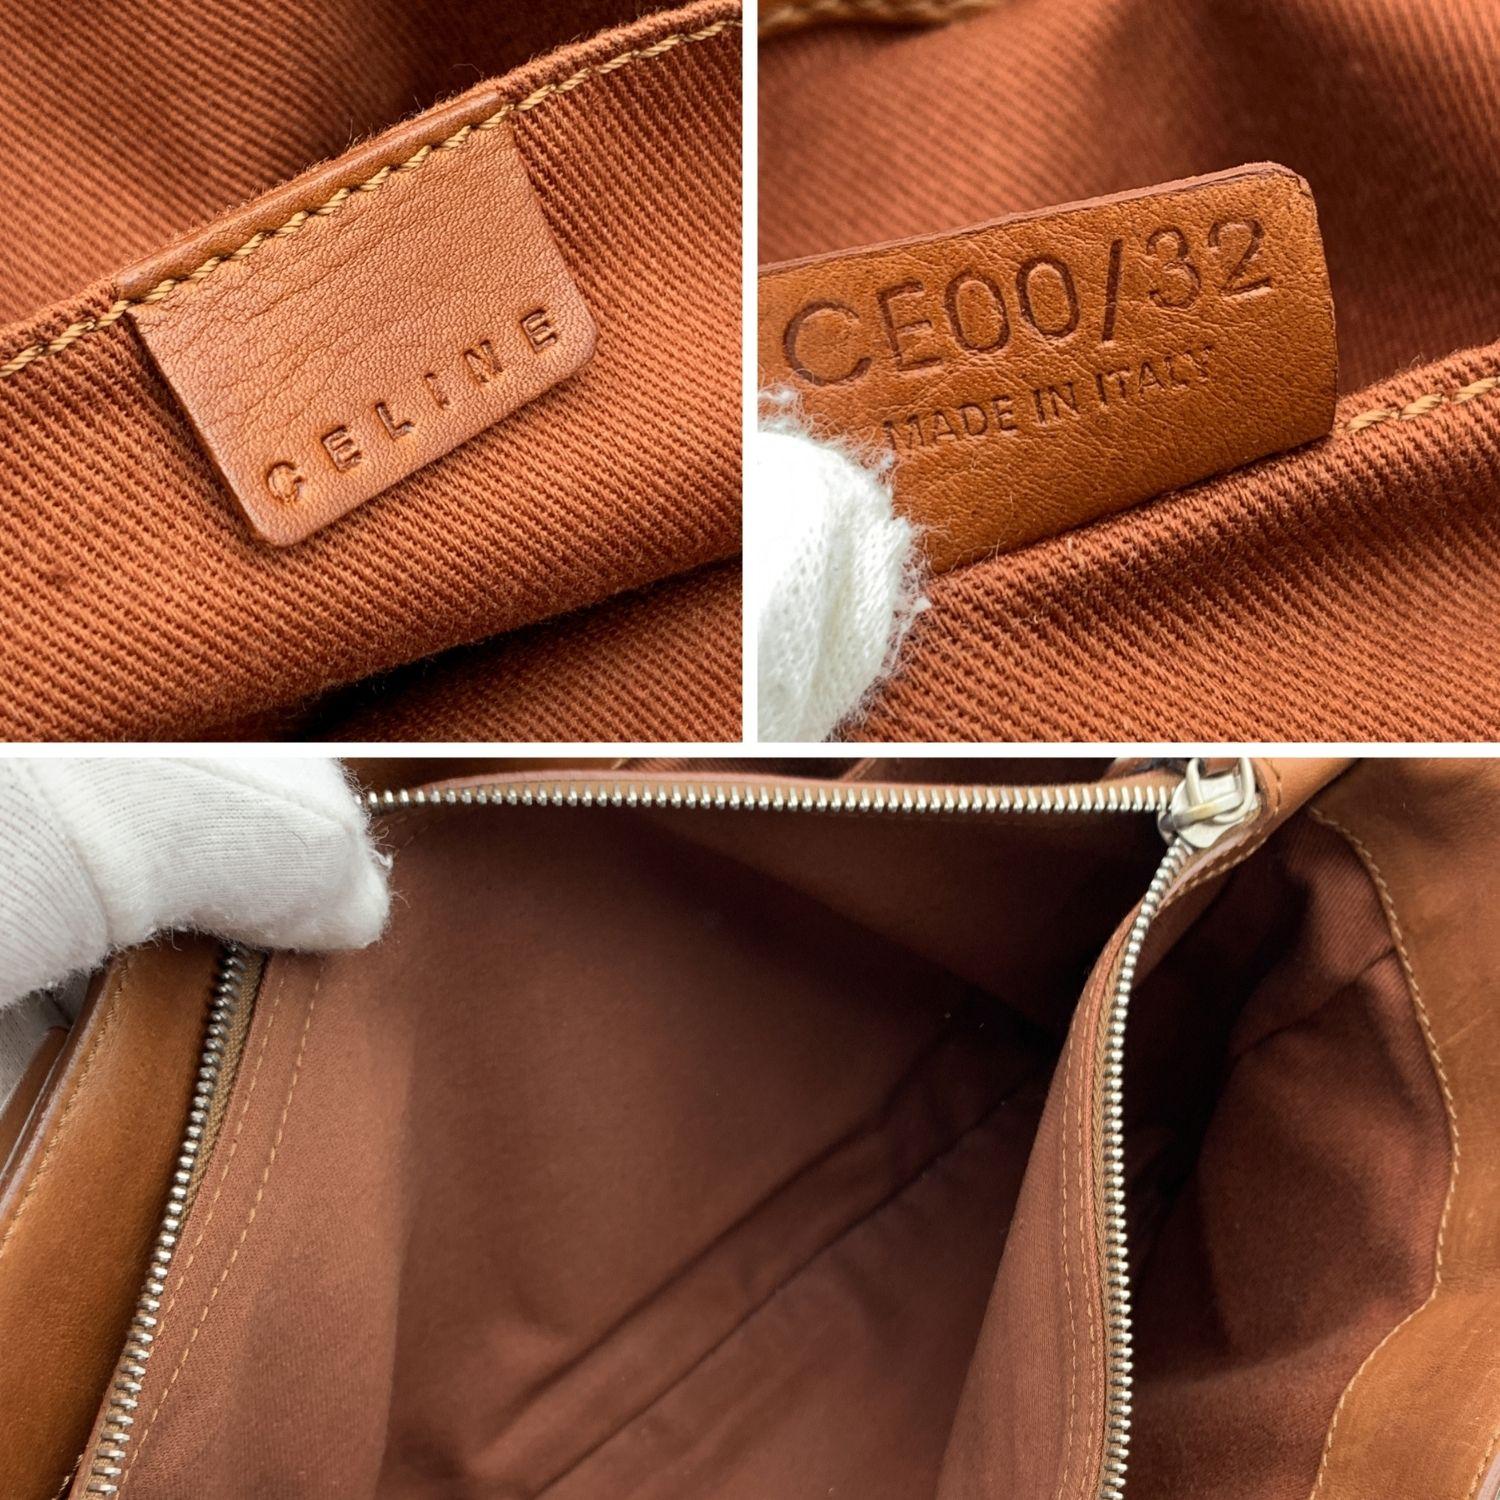 Women's Celine Light Brown Leather Boogie Bag Satchel Tote Handbag